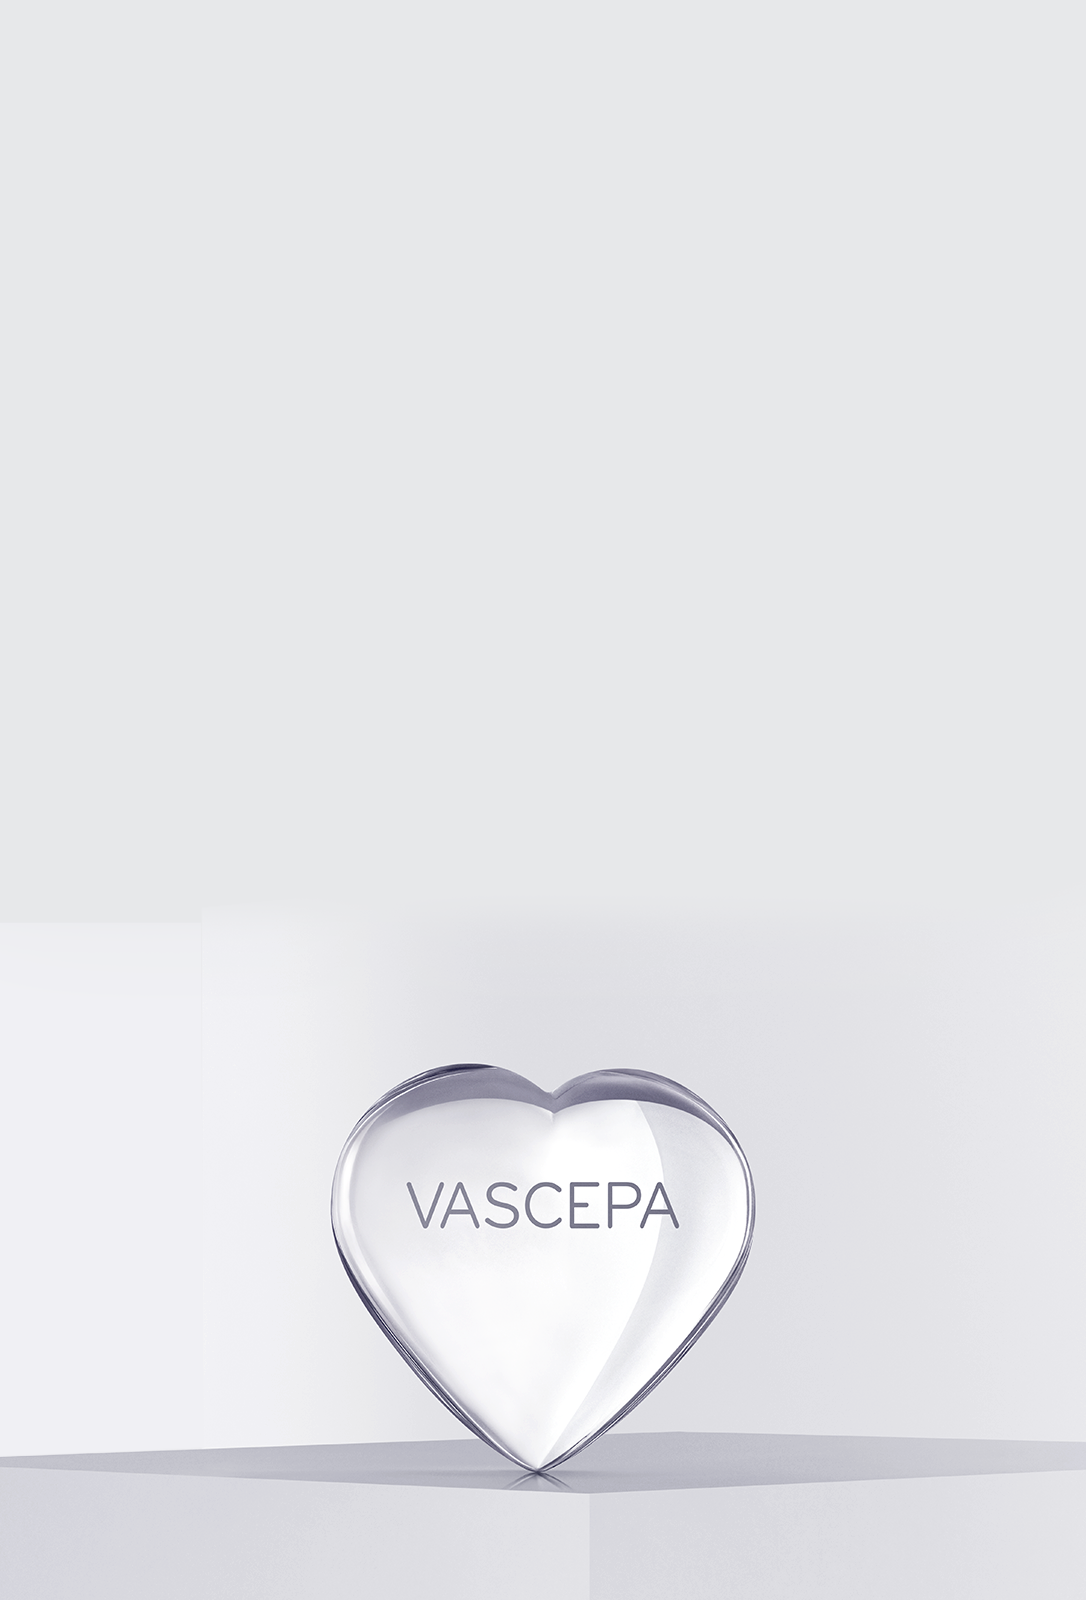 Crystal heart vascepa